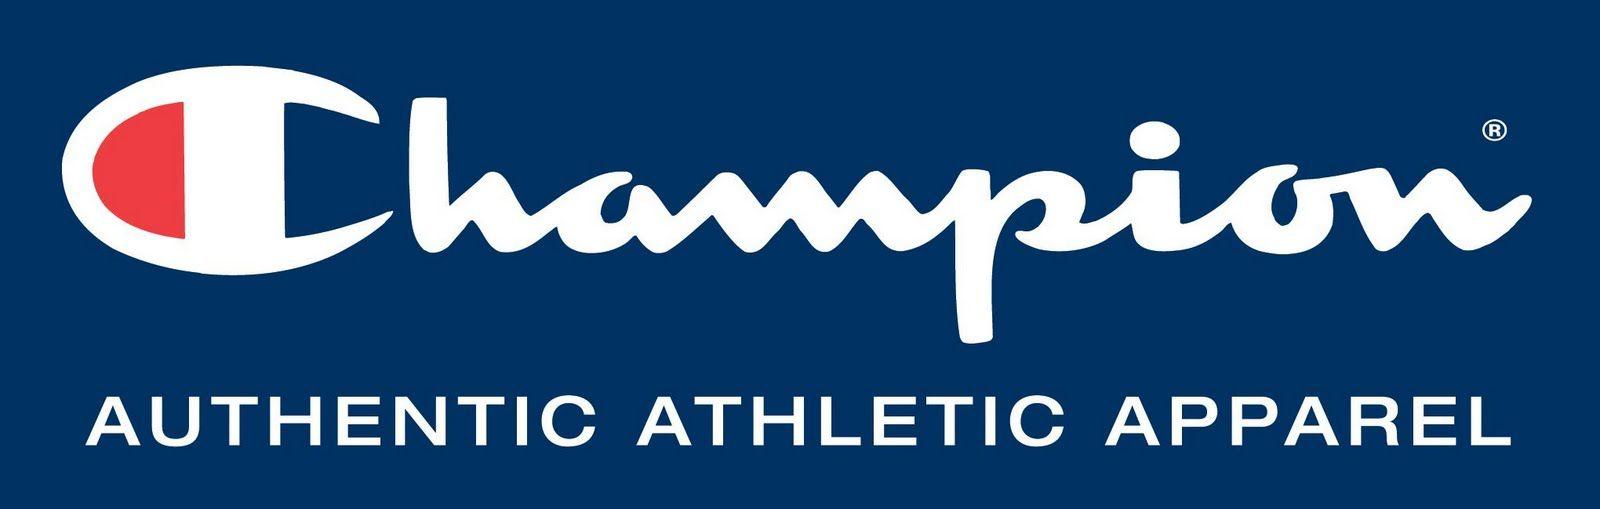 Champion Athletic Apparel Logo - Champion | My Style | Pinterest | Logos, Champion logo and Champion